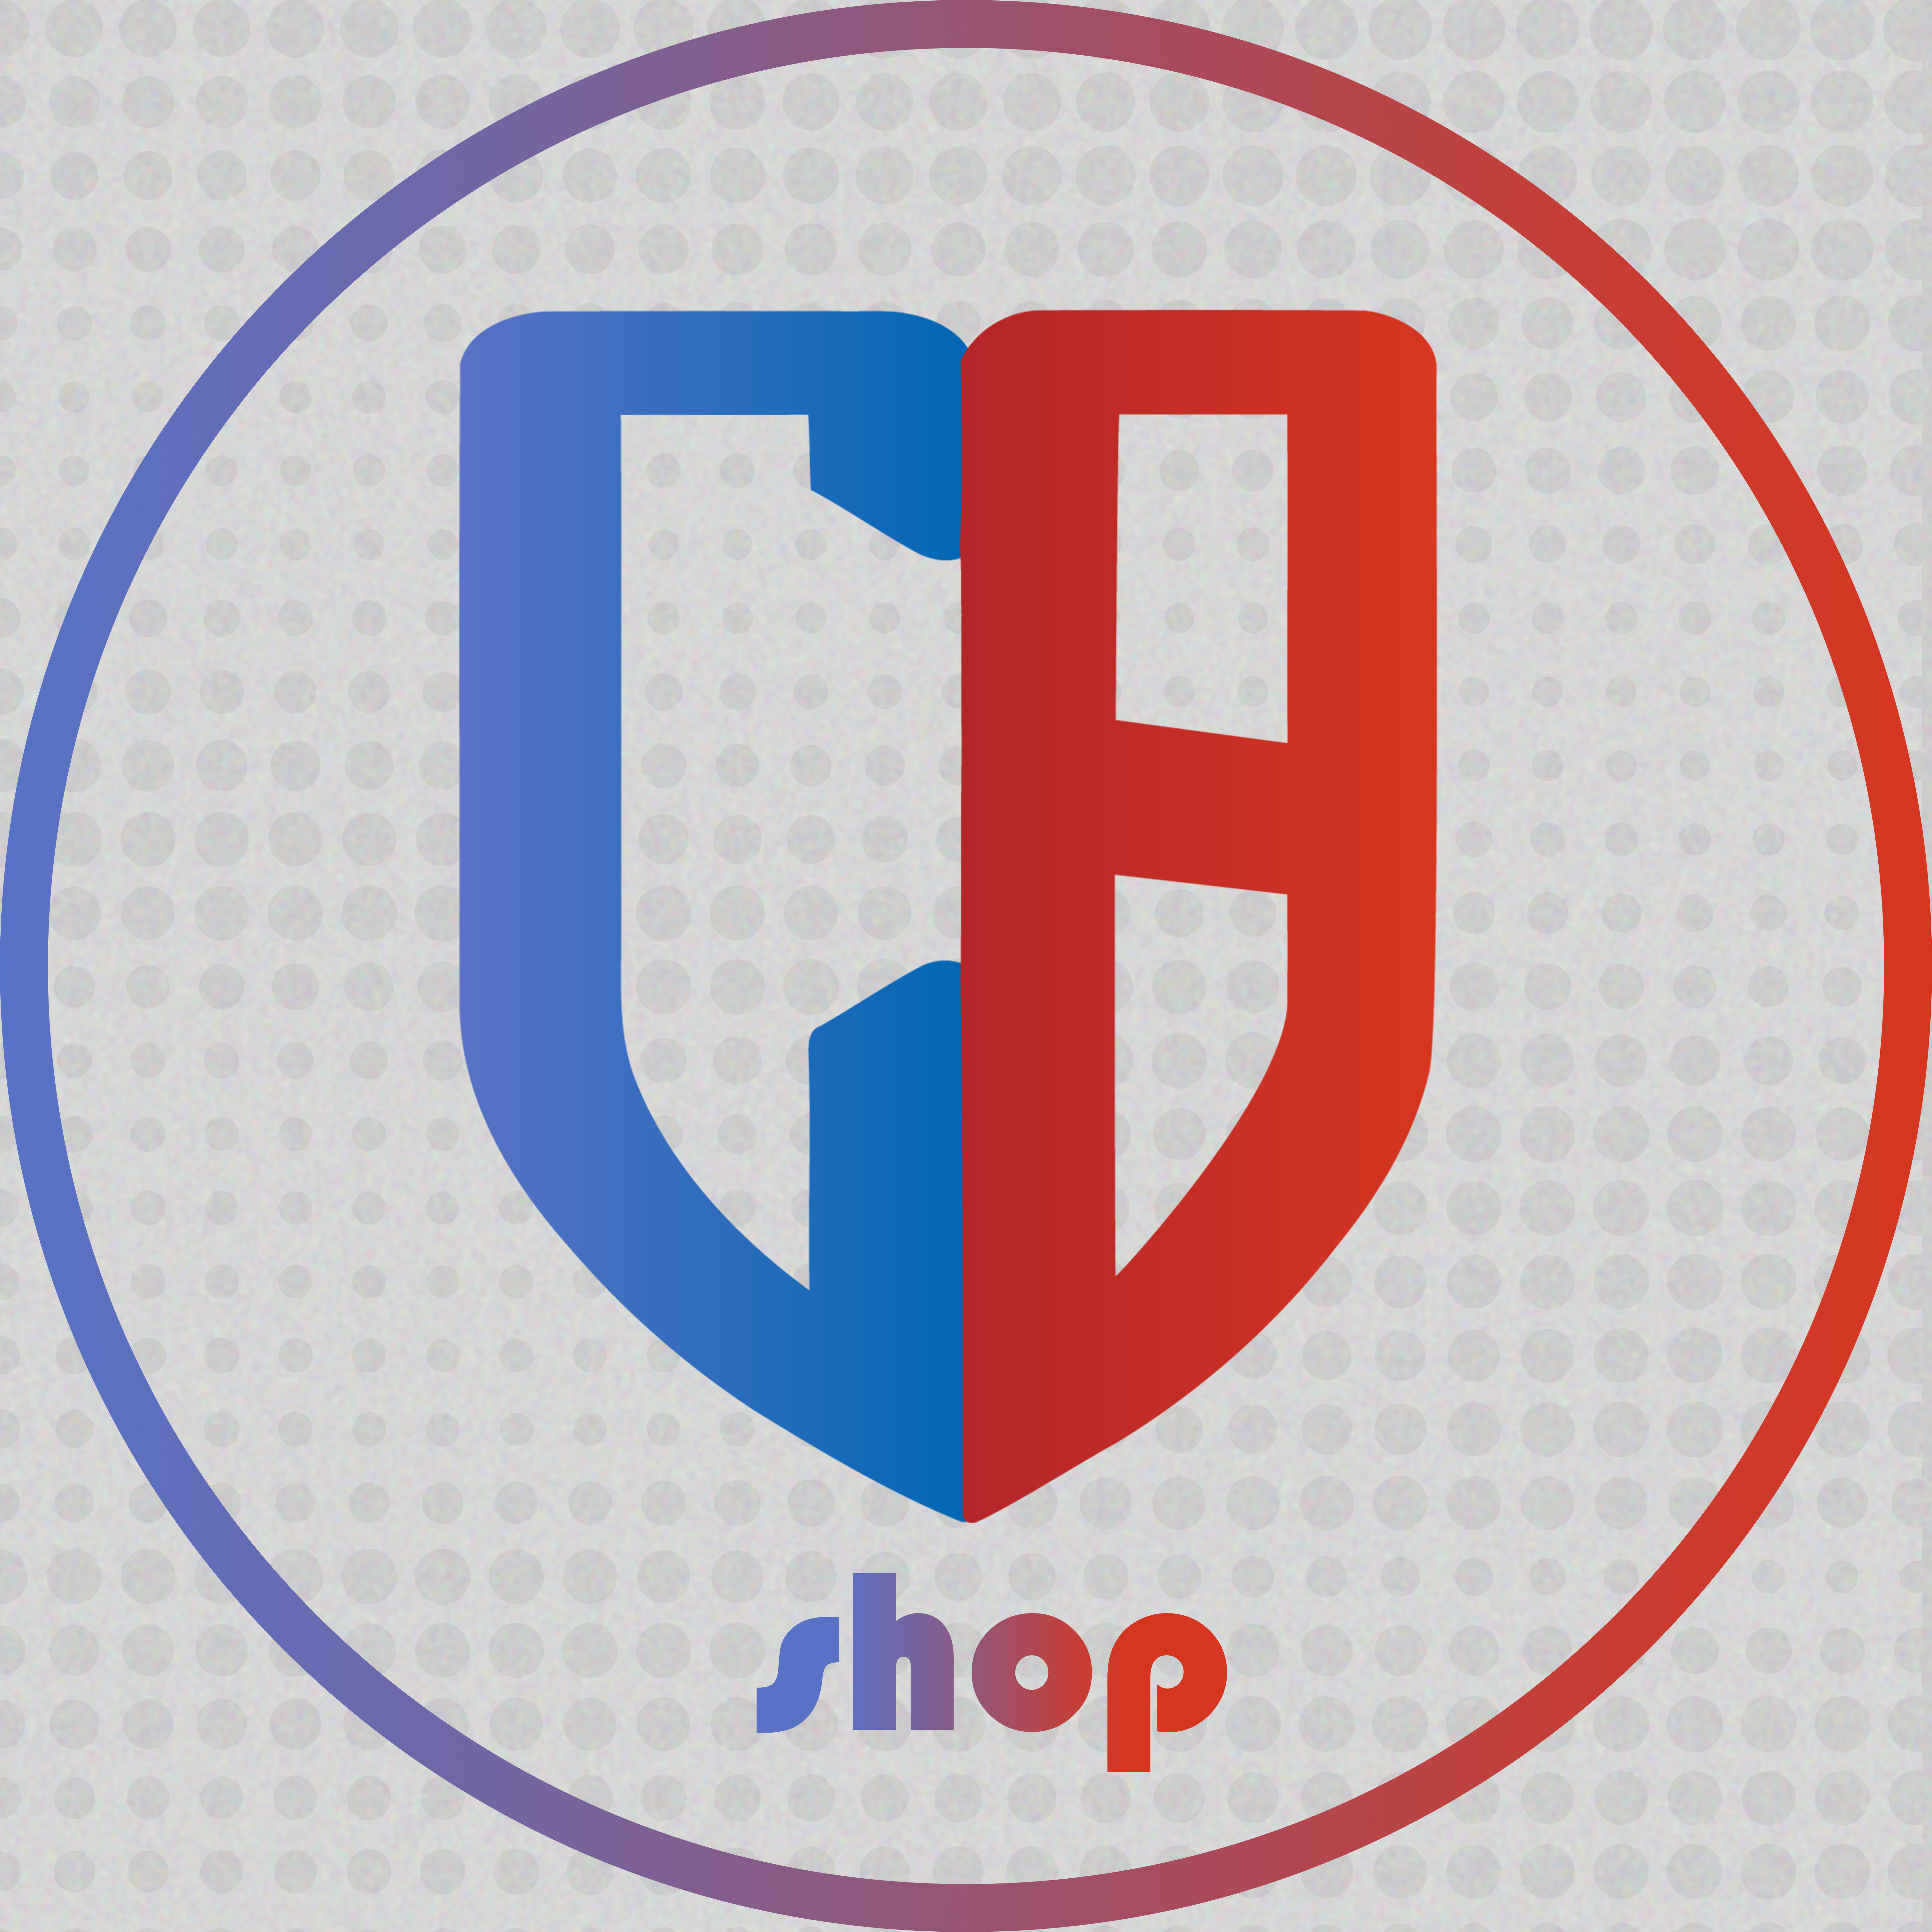 cb shop.jpg